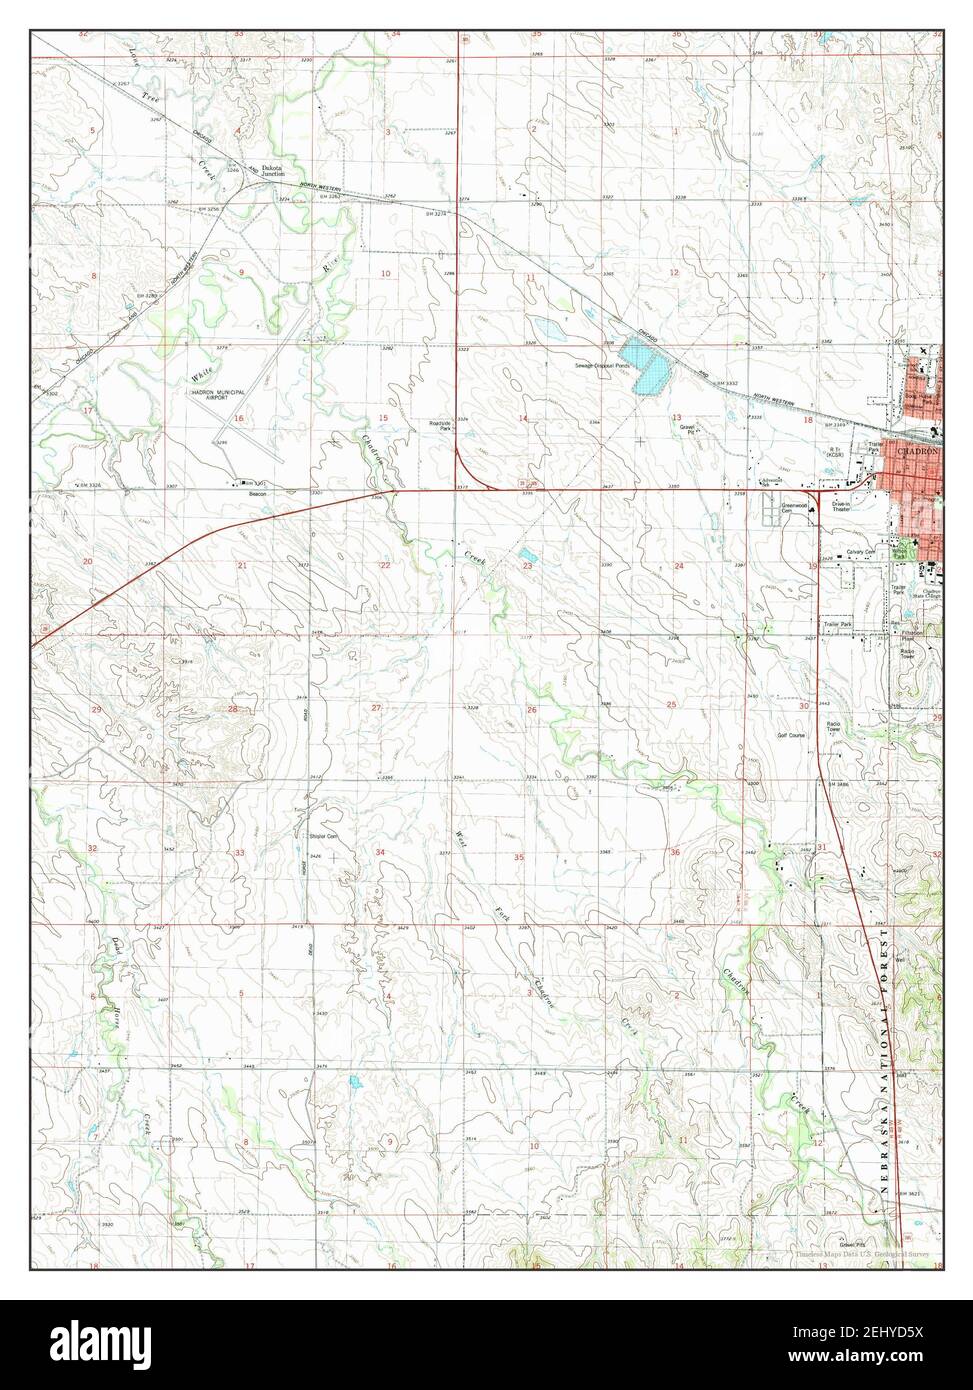 Chadron West, Nebraska, map 1980, 1:24000, United States of America by Timeless Maps, data U.S. Geological Survey Stock Photo